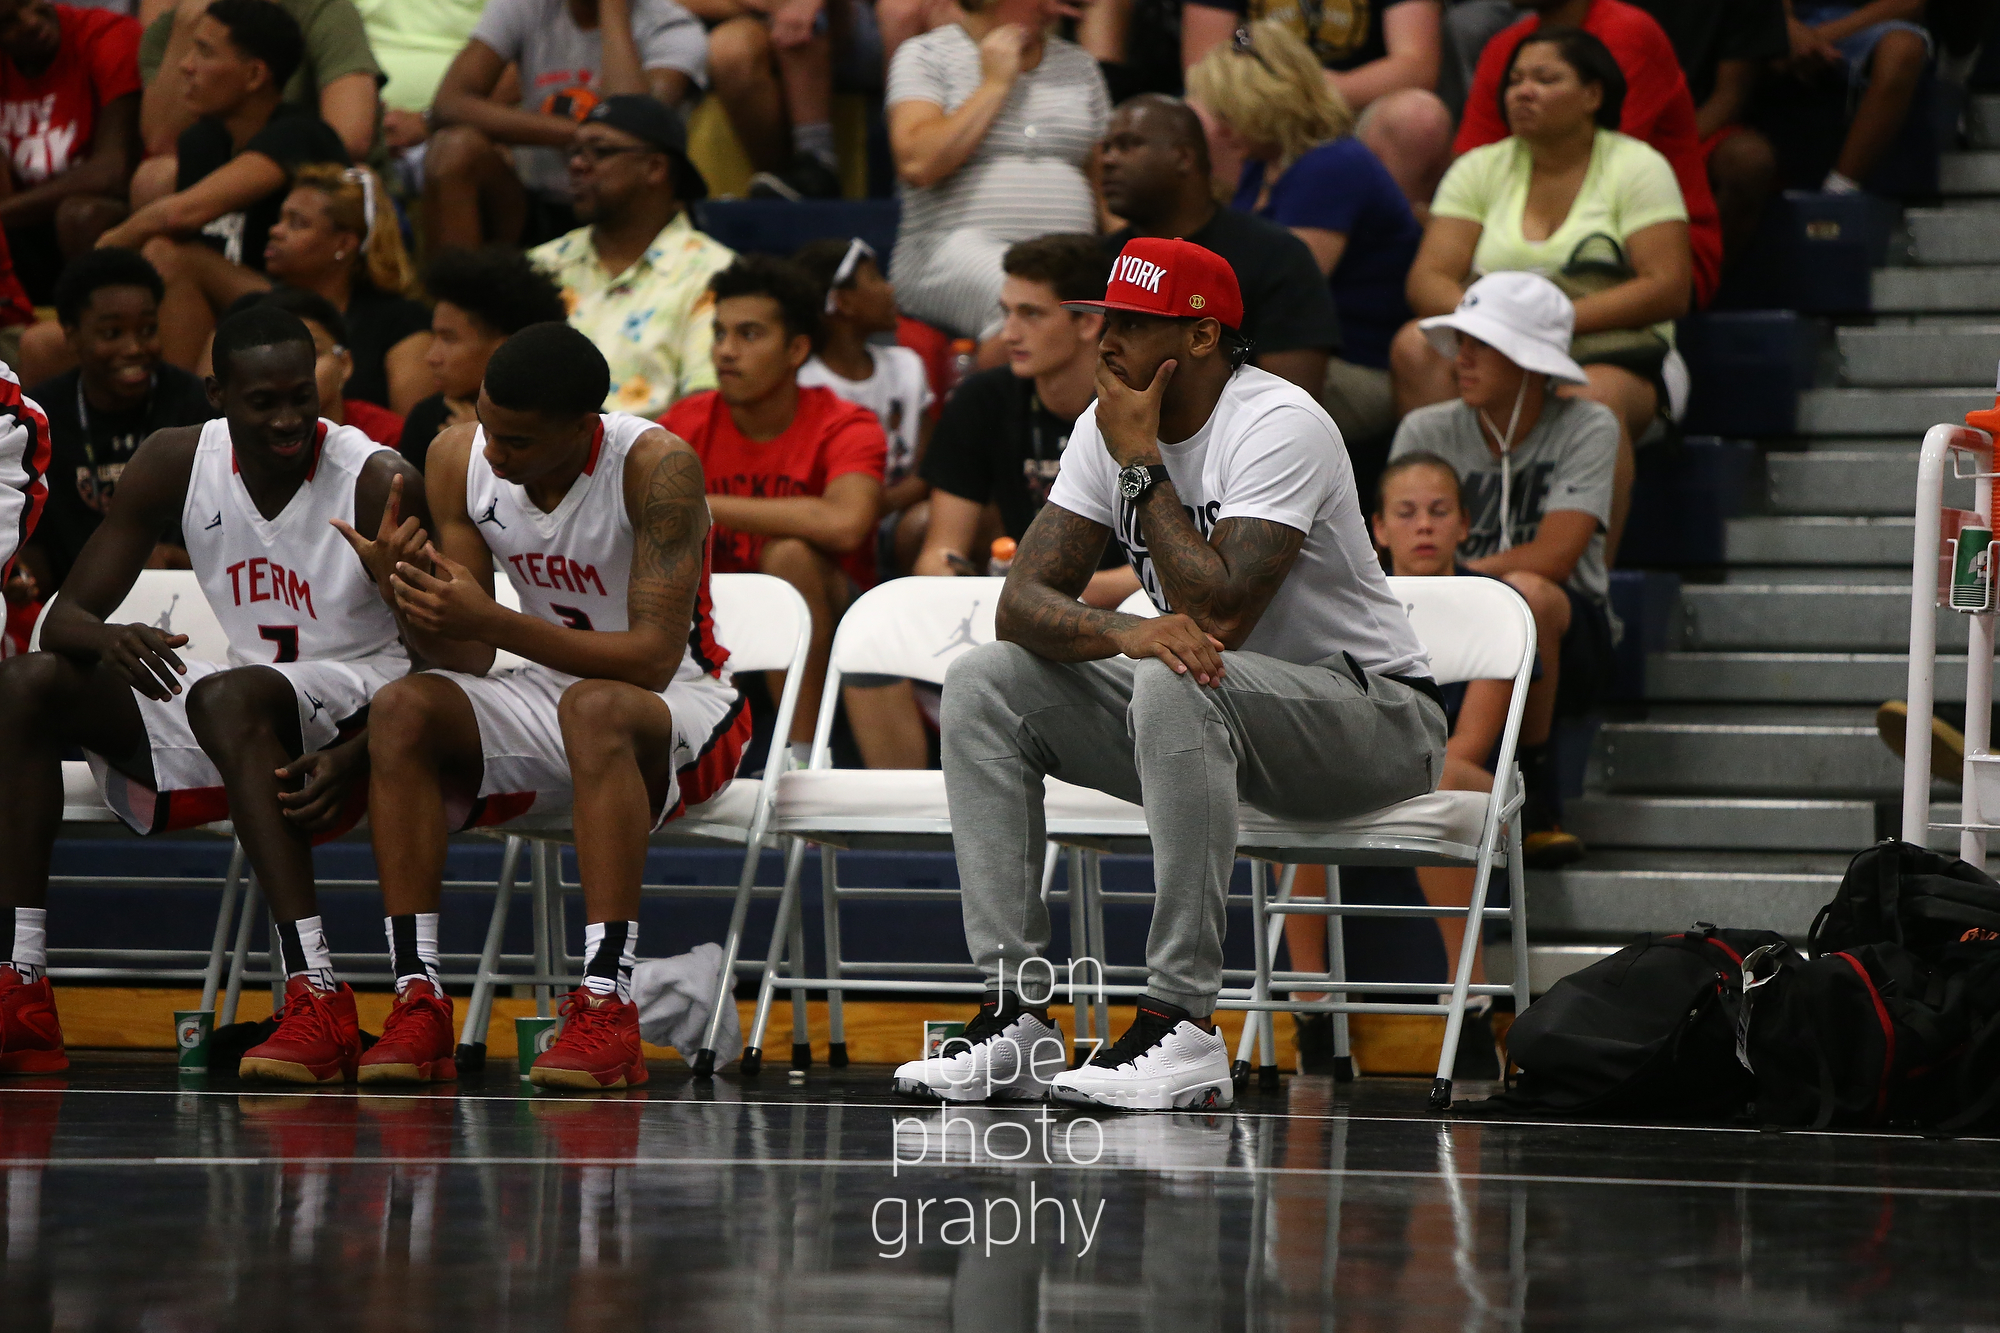  LAS VEGAS, NV. JULY 20, 2016. The Eight. Carmelo Anthony sits on Team Melo bench. (Mandatory photo credit: Jon Lopez/Nike).  